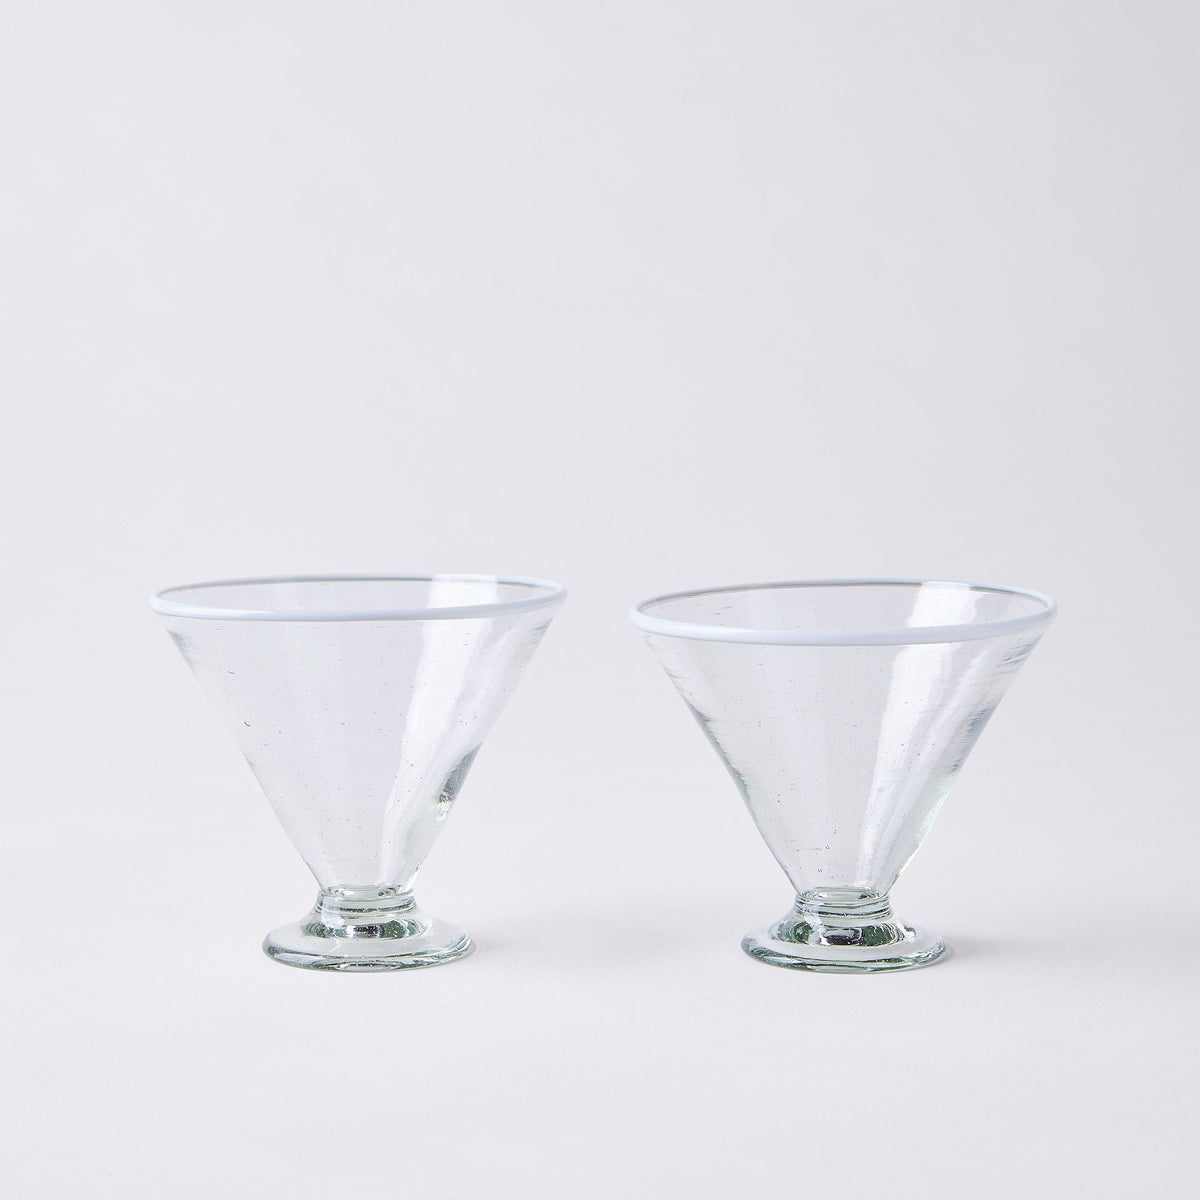 Sobremesa Hand-Blown Recycled Margarita Glasses (Set of 2), 3